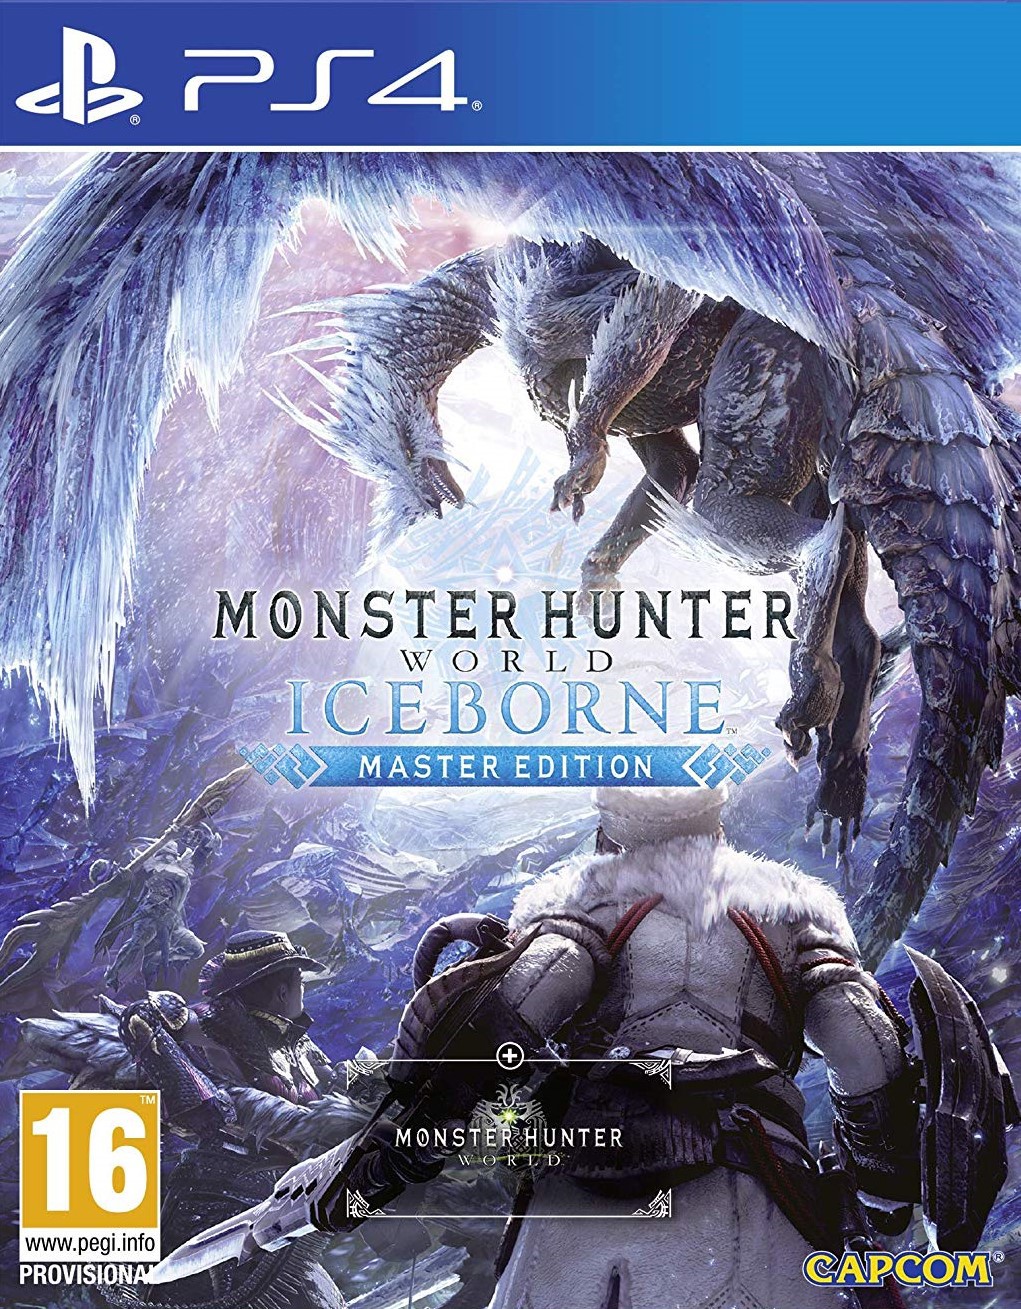 Monster Hunter: World Iceborne Master Edition